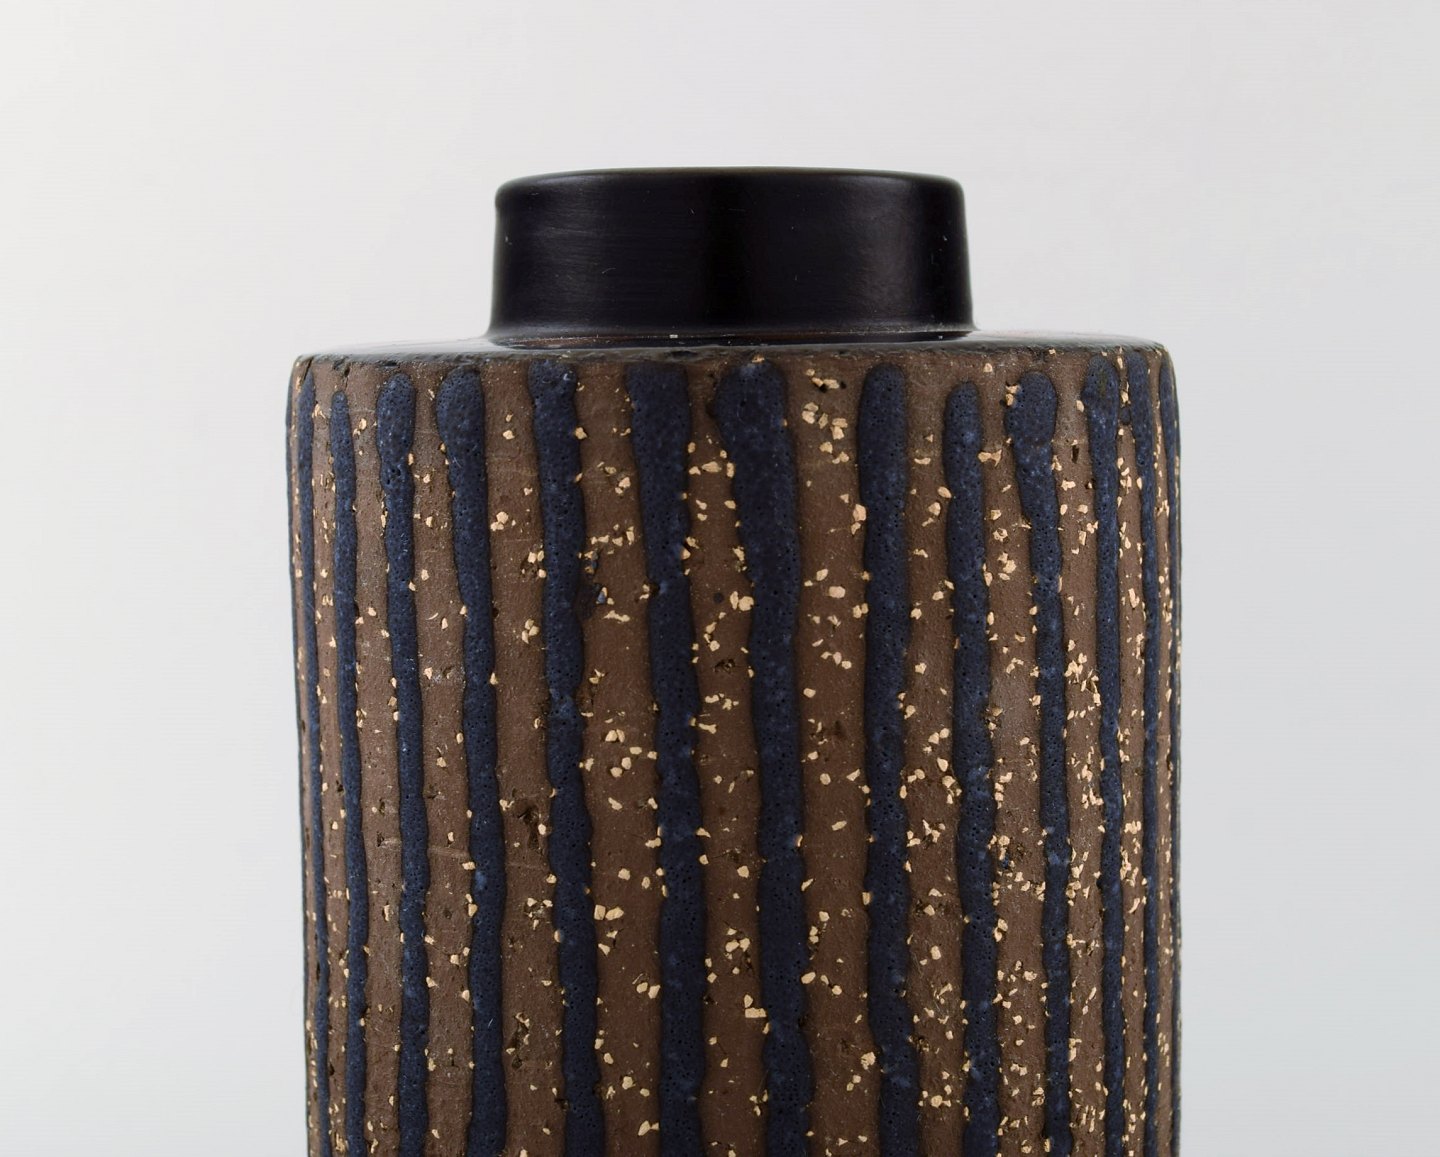 WorldAntique.net Simmulson for Upsala-Ekeby ceramic vase. *